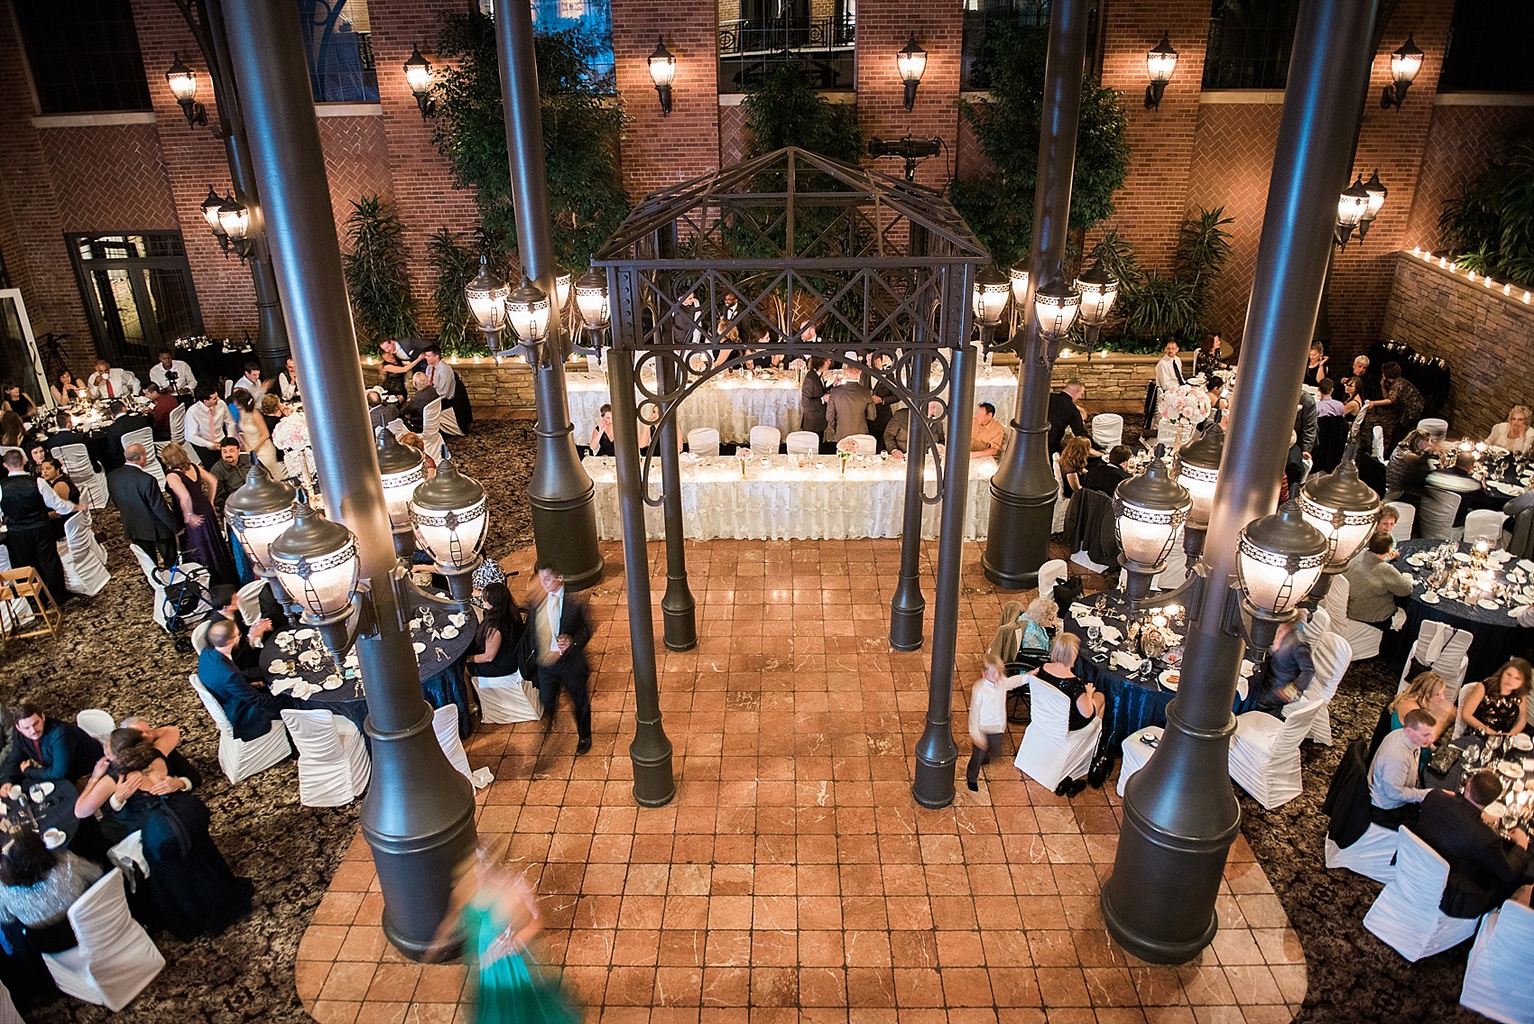 Detroit Wedding venues: The Inn at St. John's atrium wedding reception setup